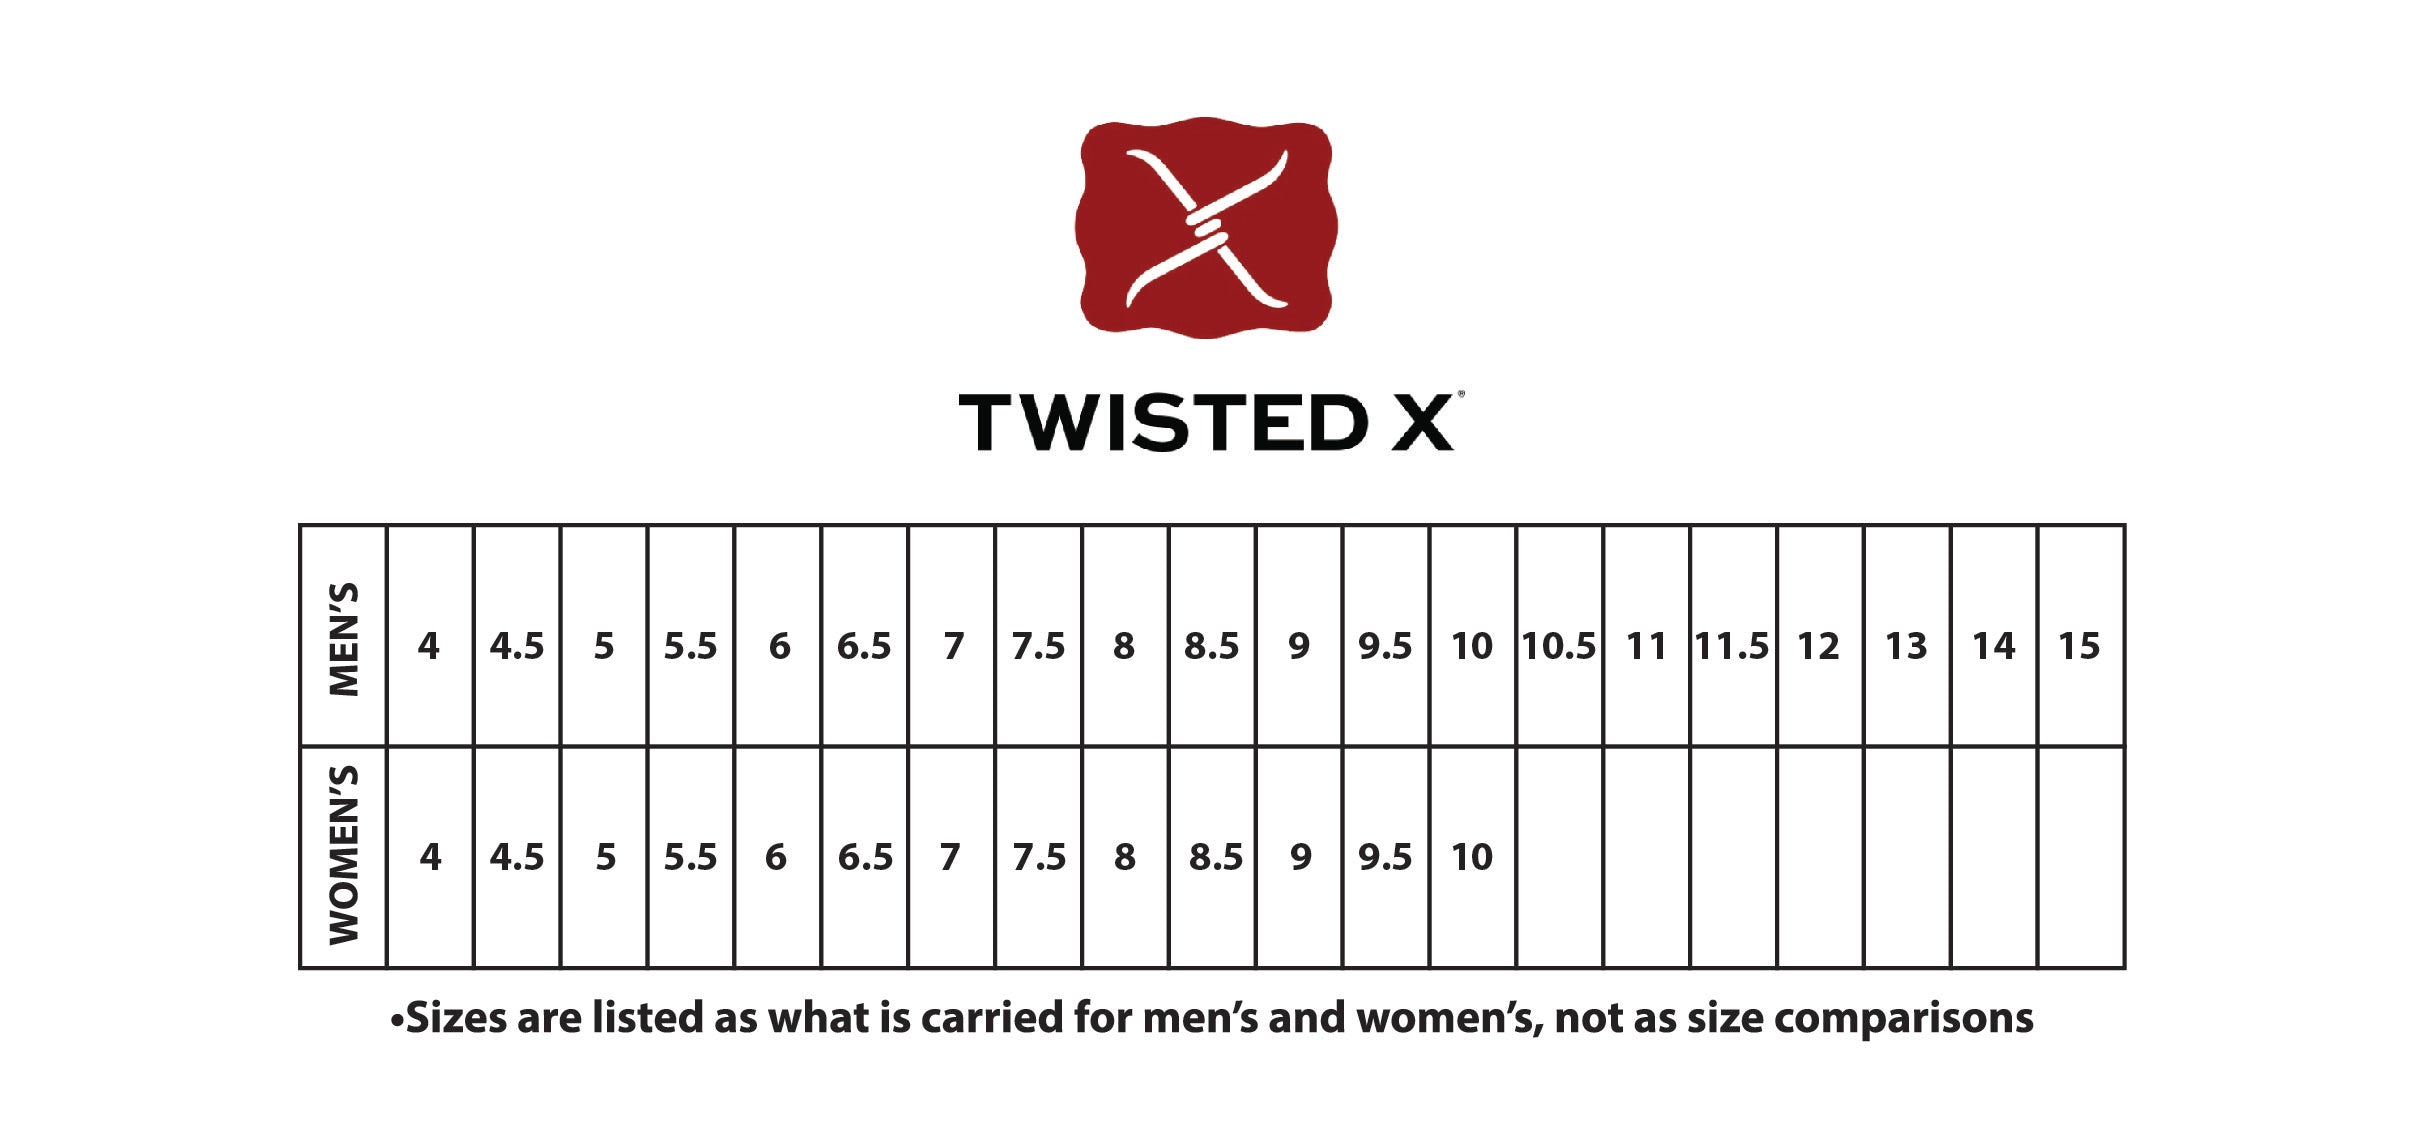 TWISTED X FOOTWEAR SIZE CHART